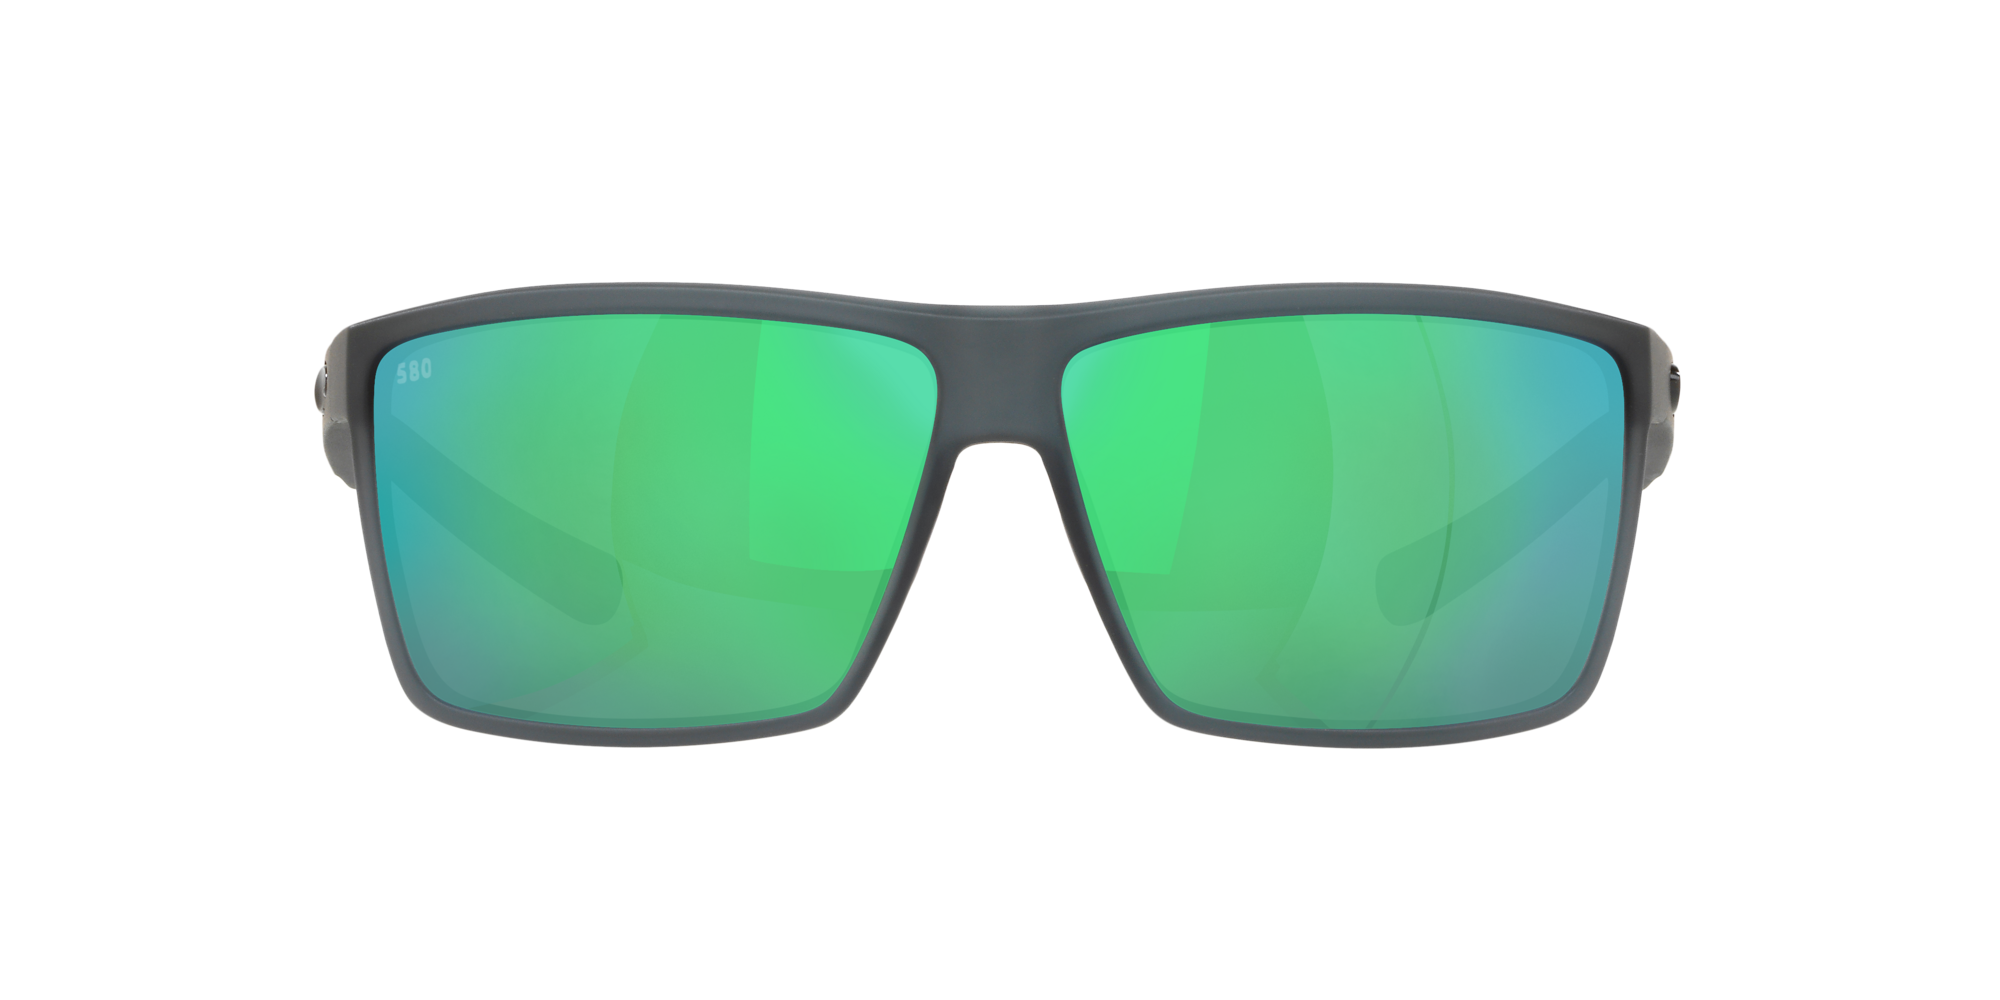 Costa Del Mar Sunglasses RINCON Smoke Crystal Gray Polarized Green Mirror 580G 